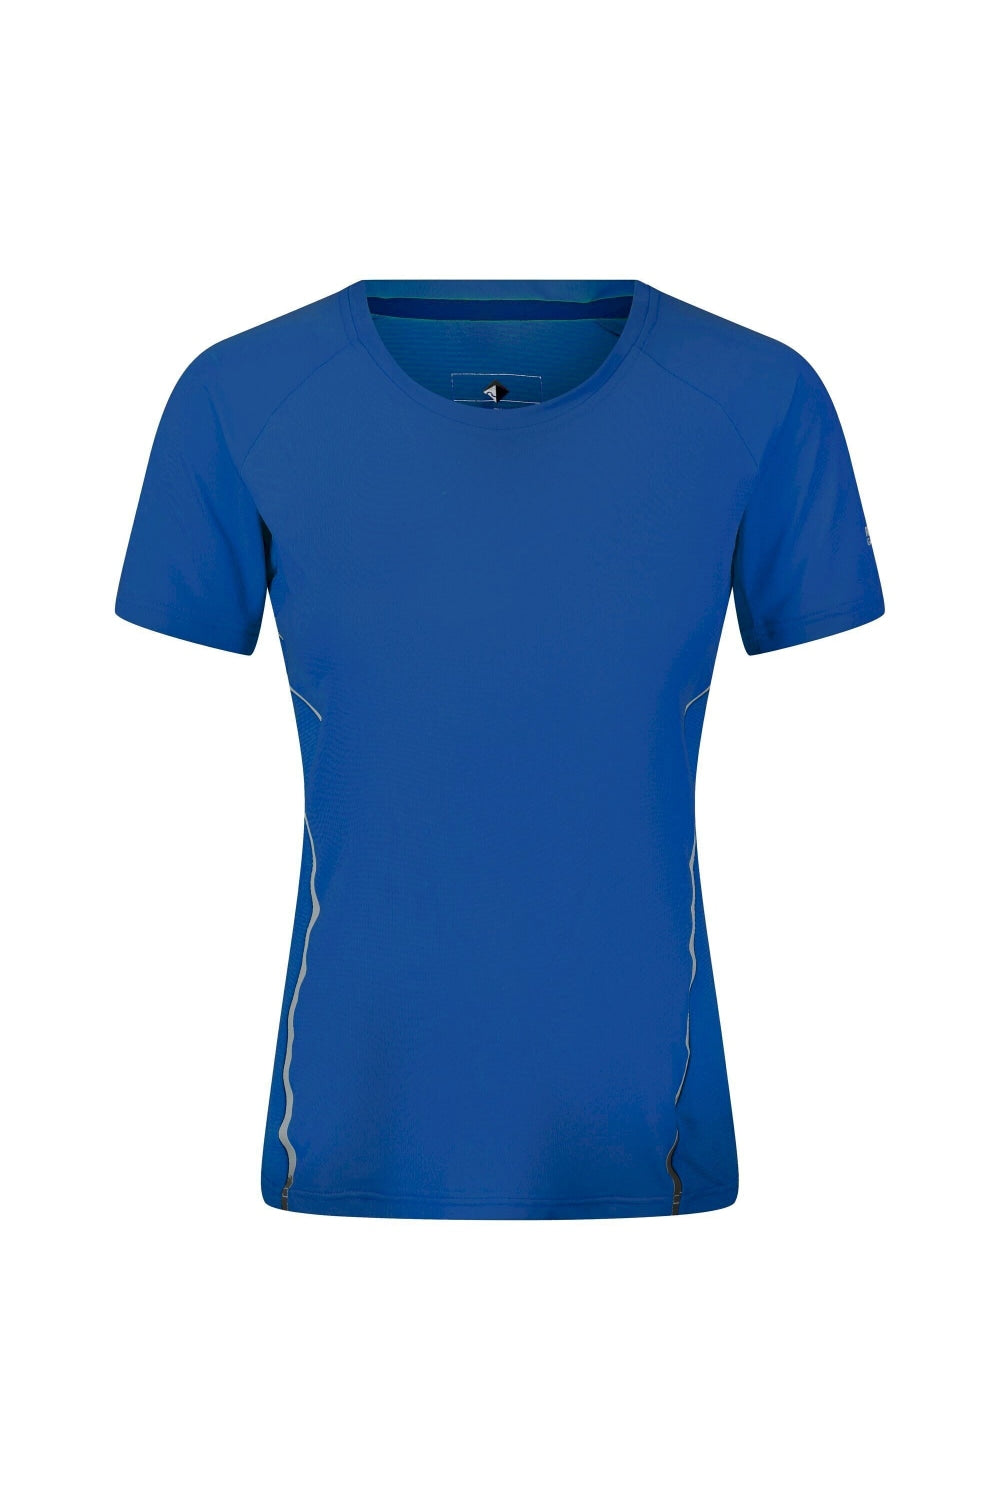 Regatta Womens/Ladies Highton Pro T-Shirt